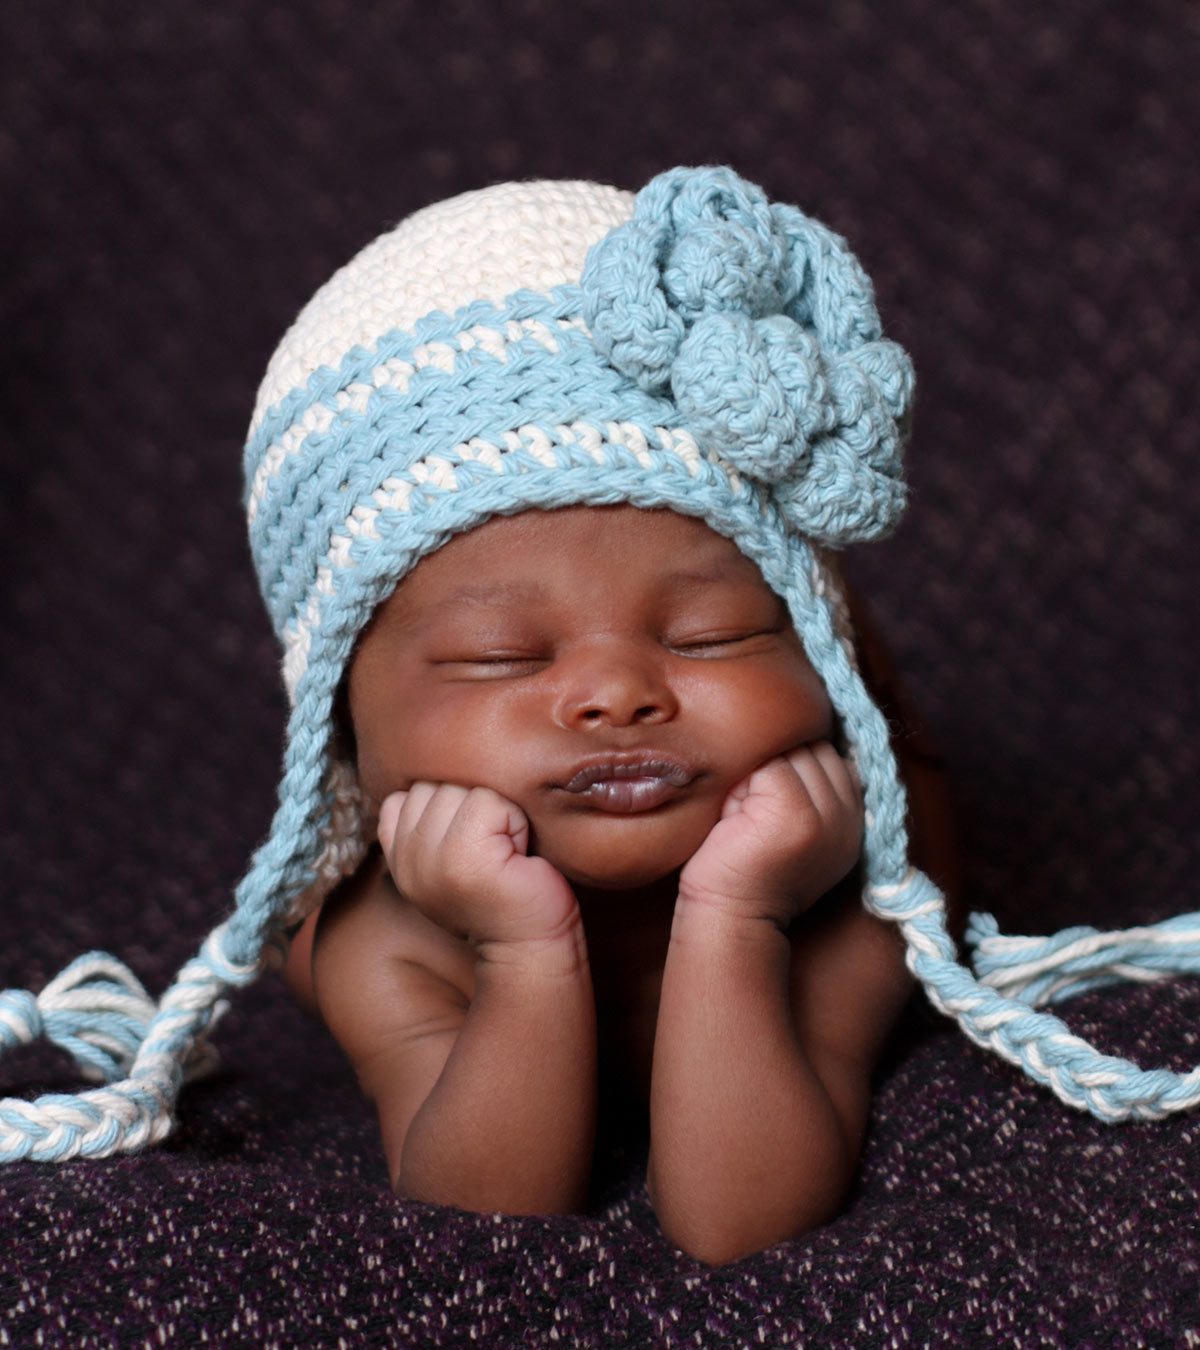 A cute Somali baby